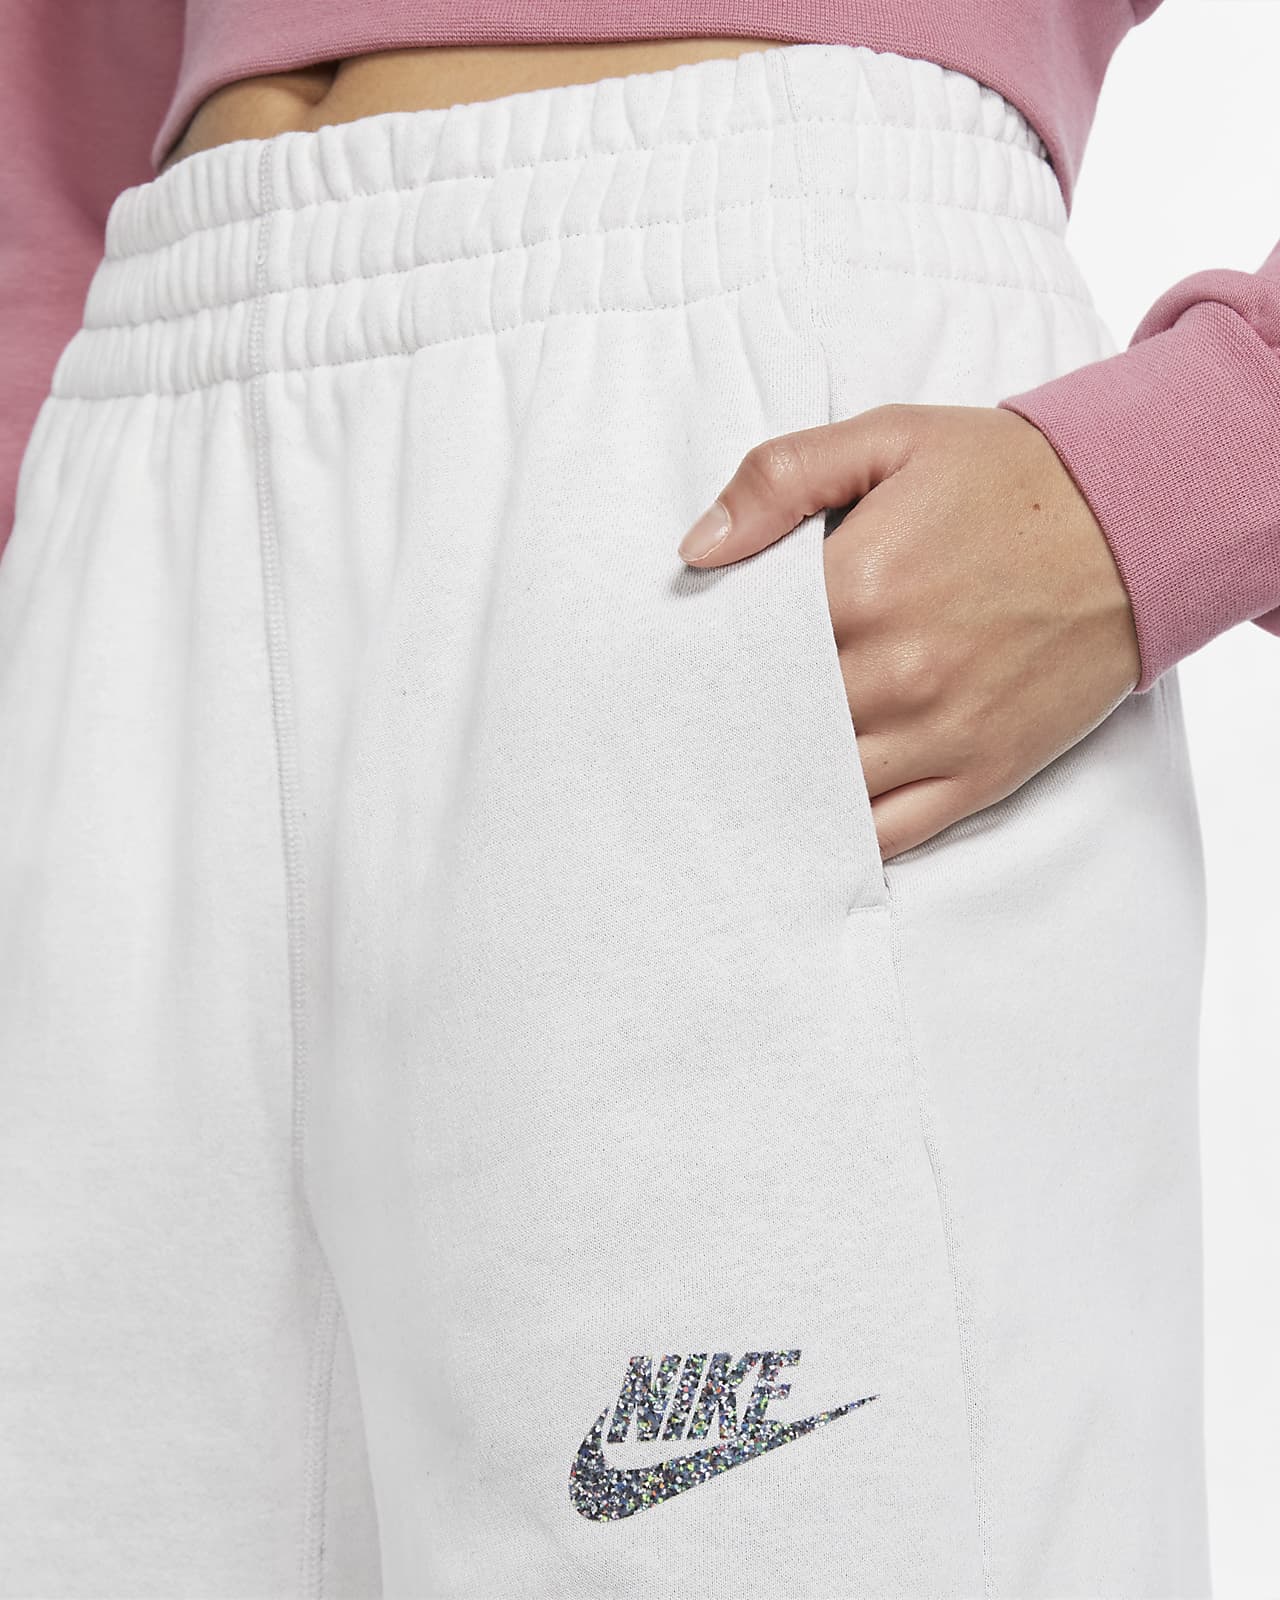 nike sportswear shorts ladies